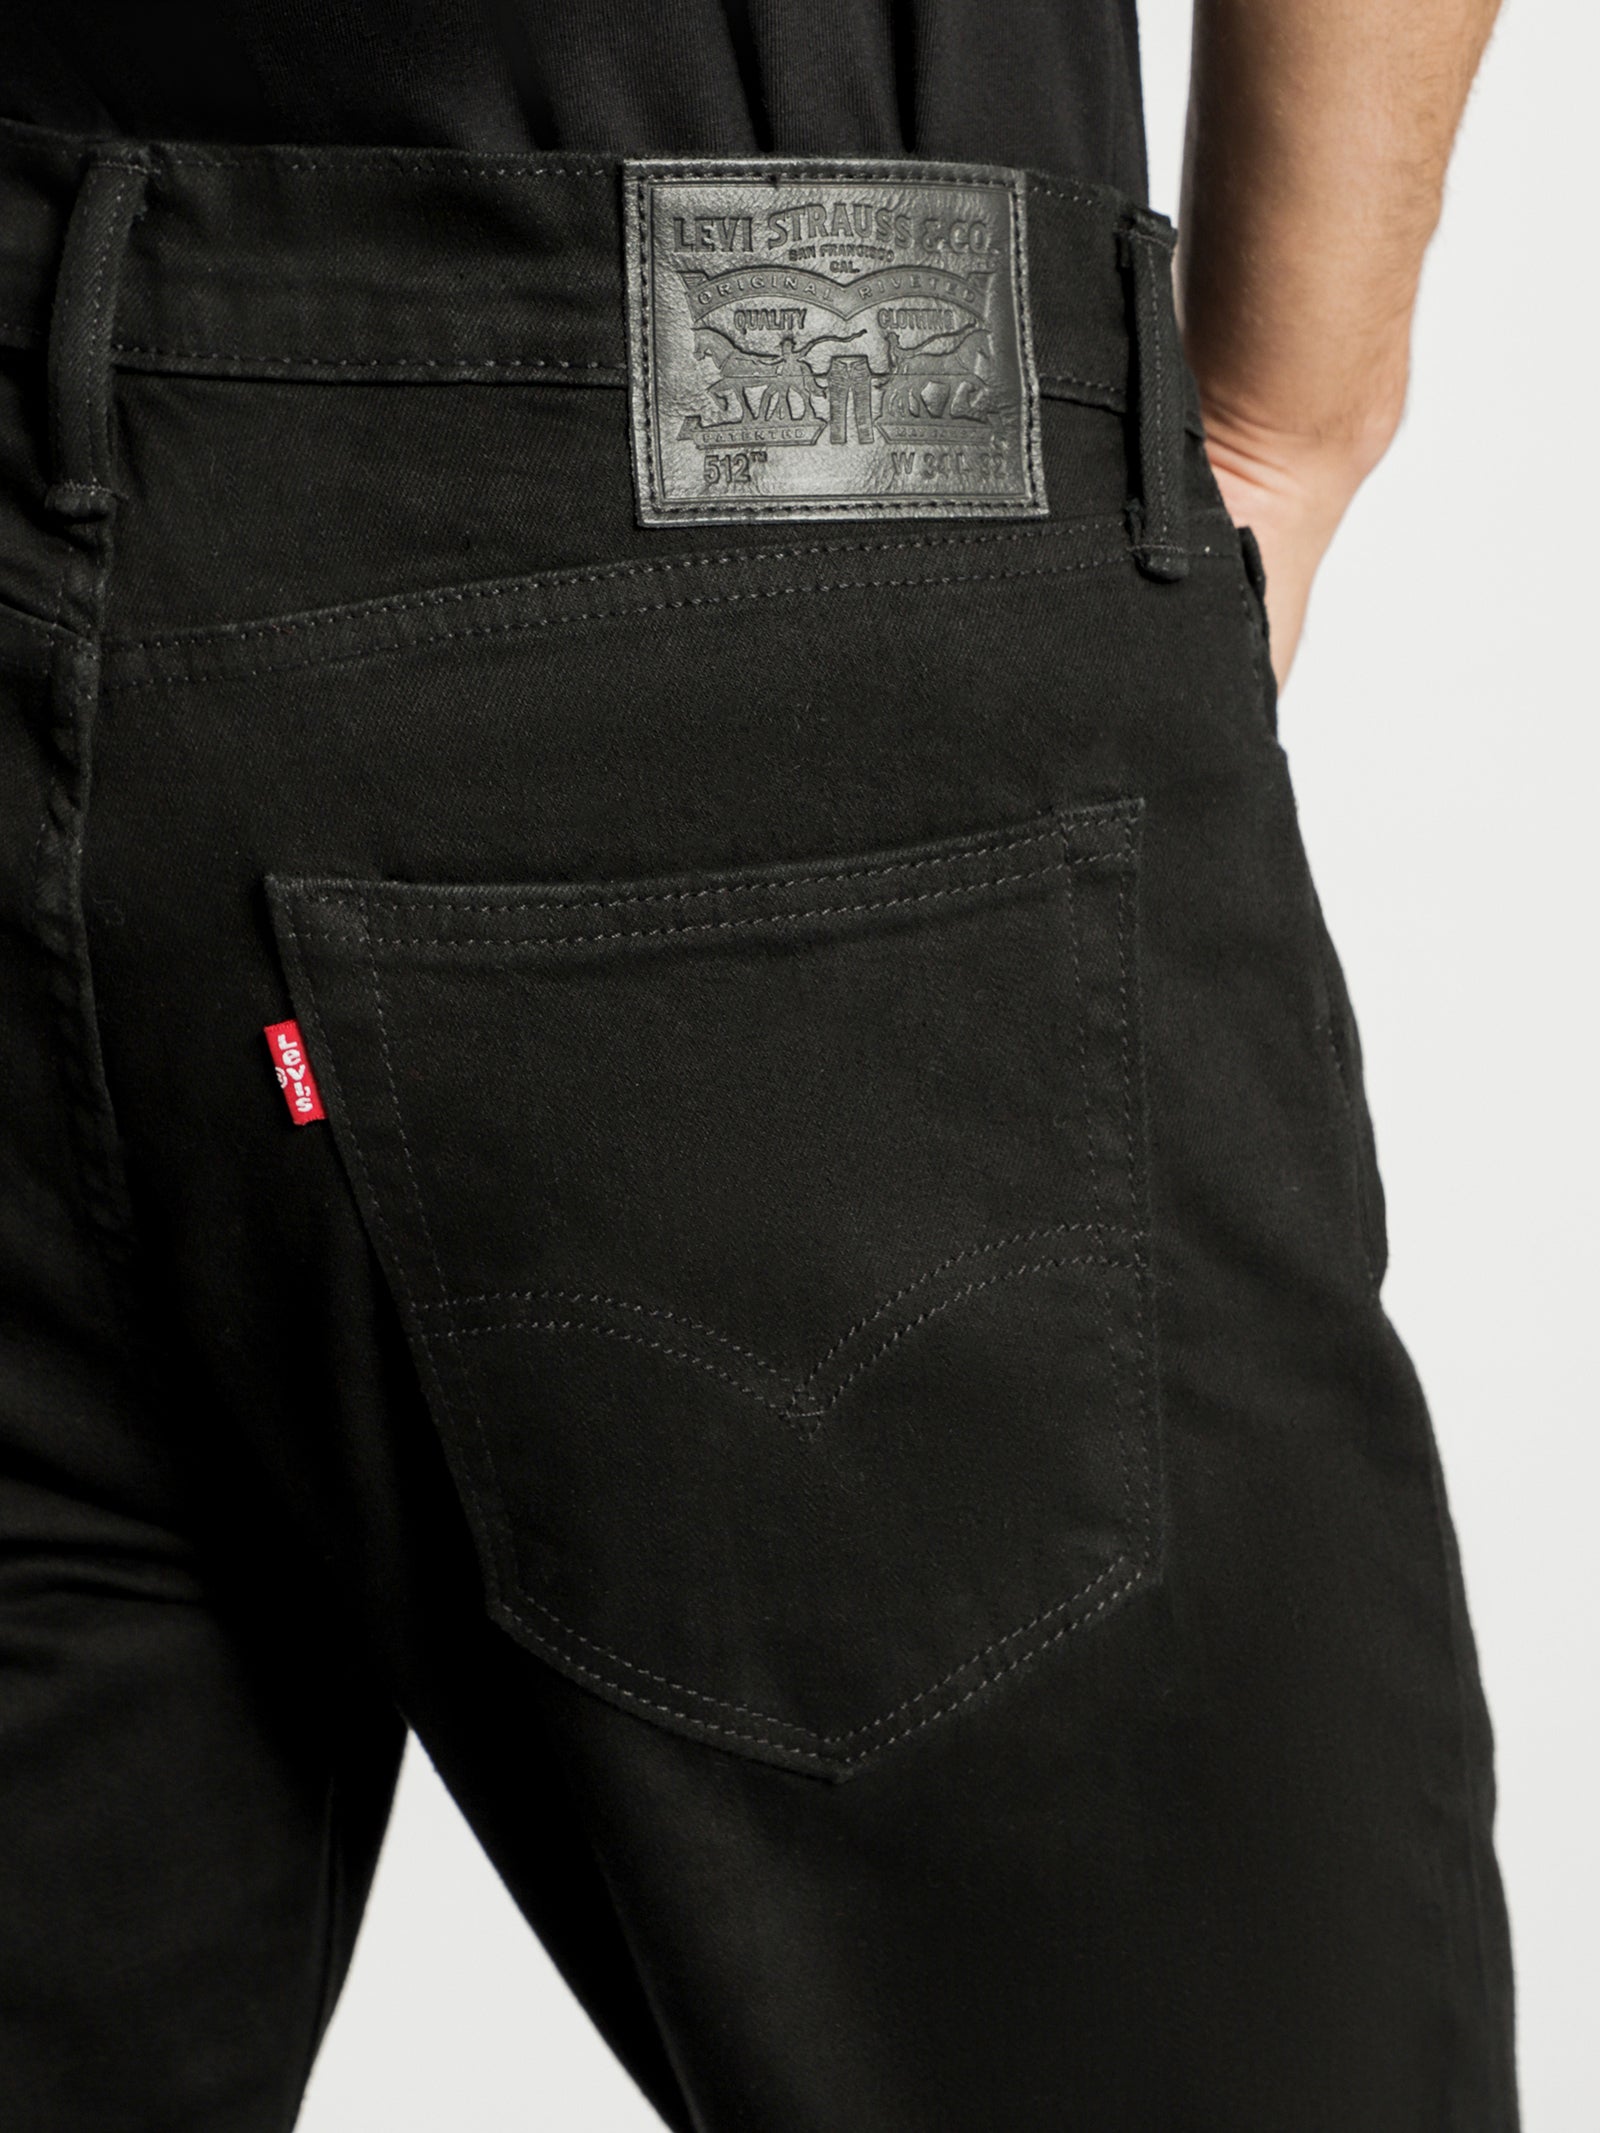 512 Slim Tapered Jeans in Nightshine Black Denim - Glue Store